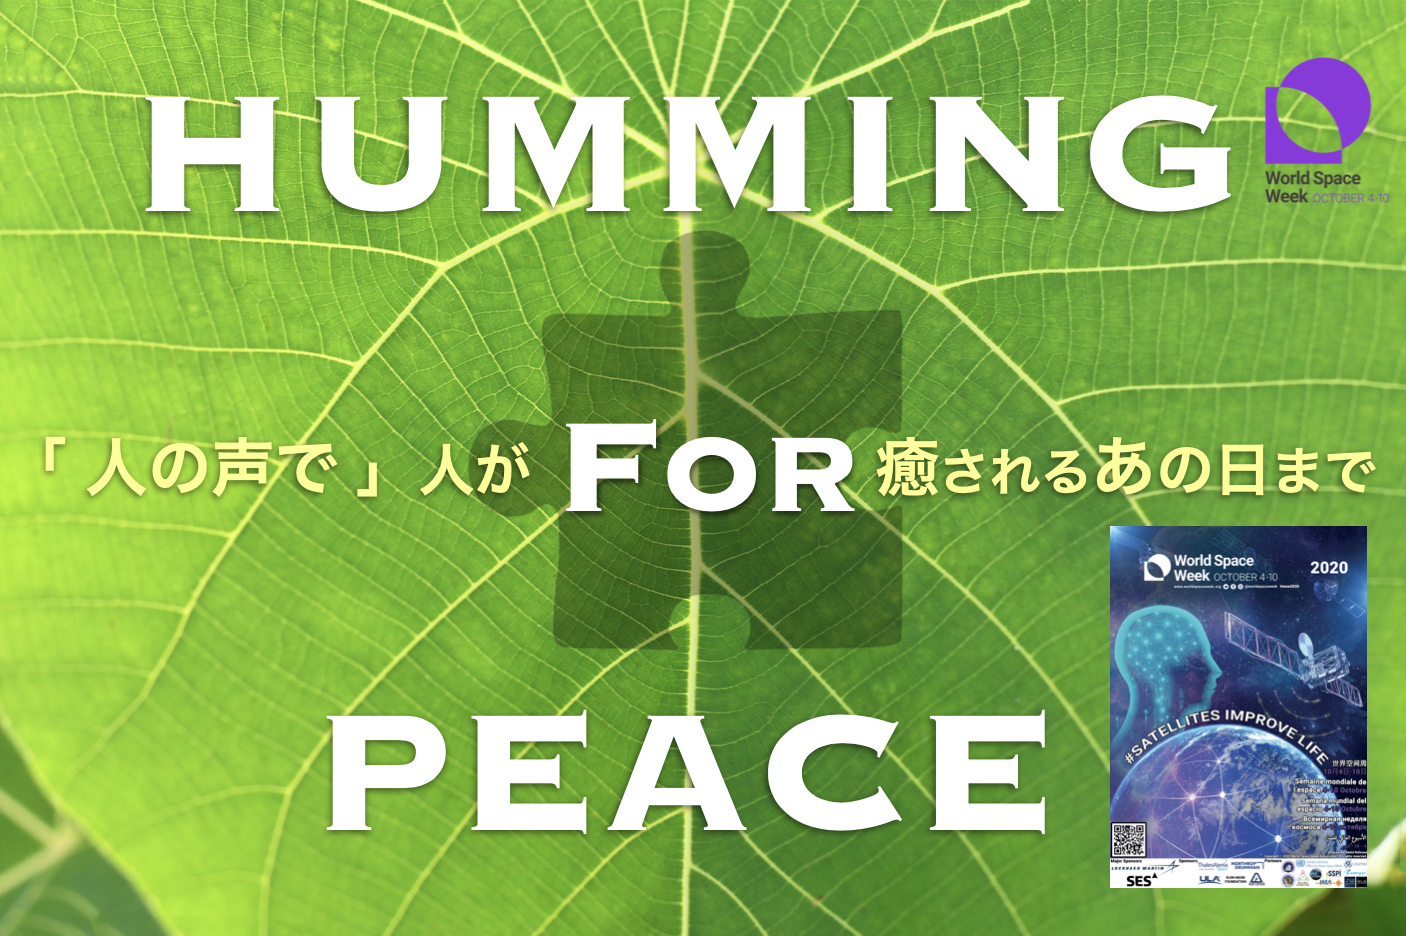 Humming for PEACEとは（ハミングフォーピースとは）日本発祥の平和活動・ハミングで世界平和